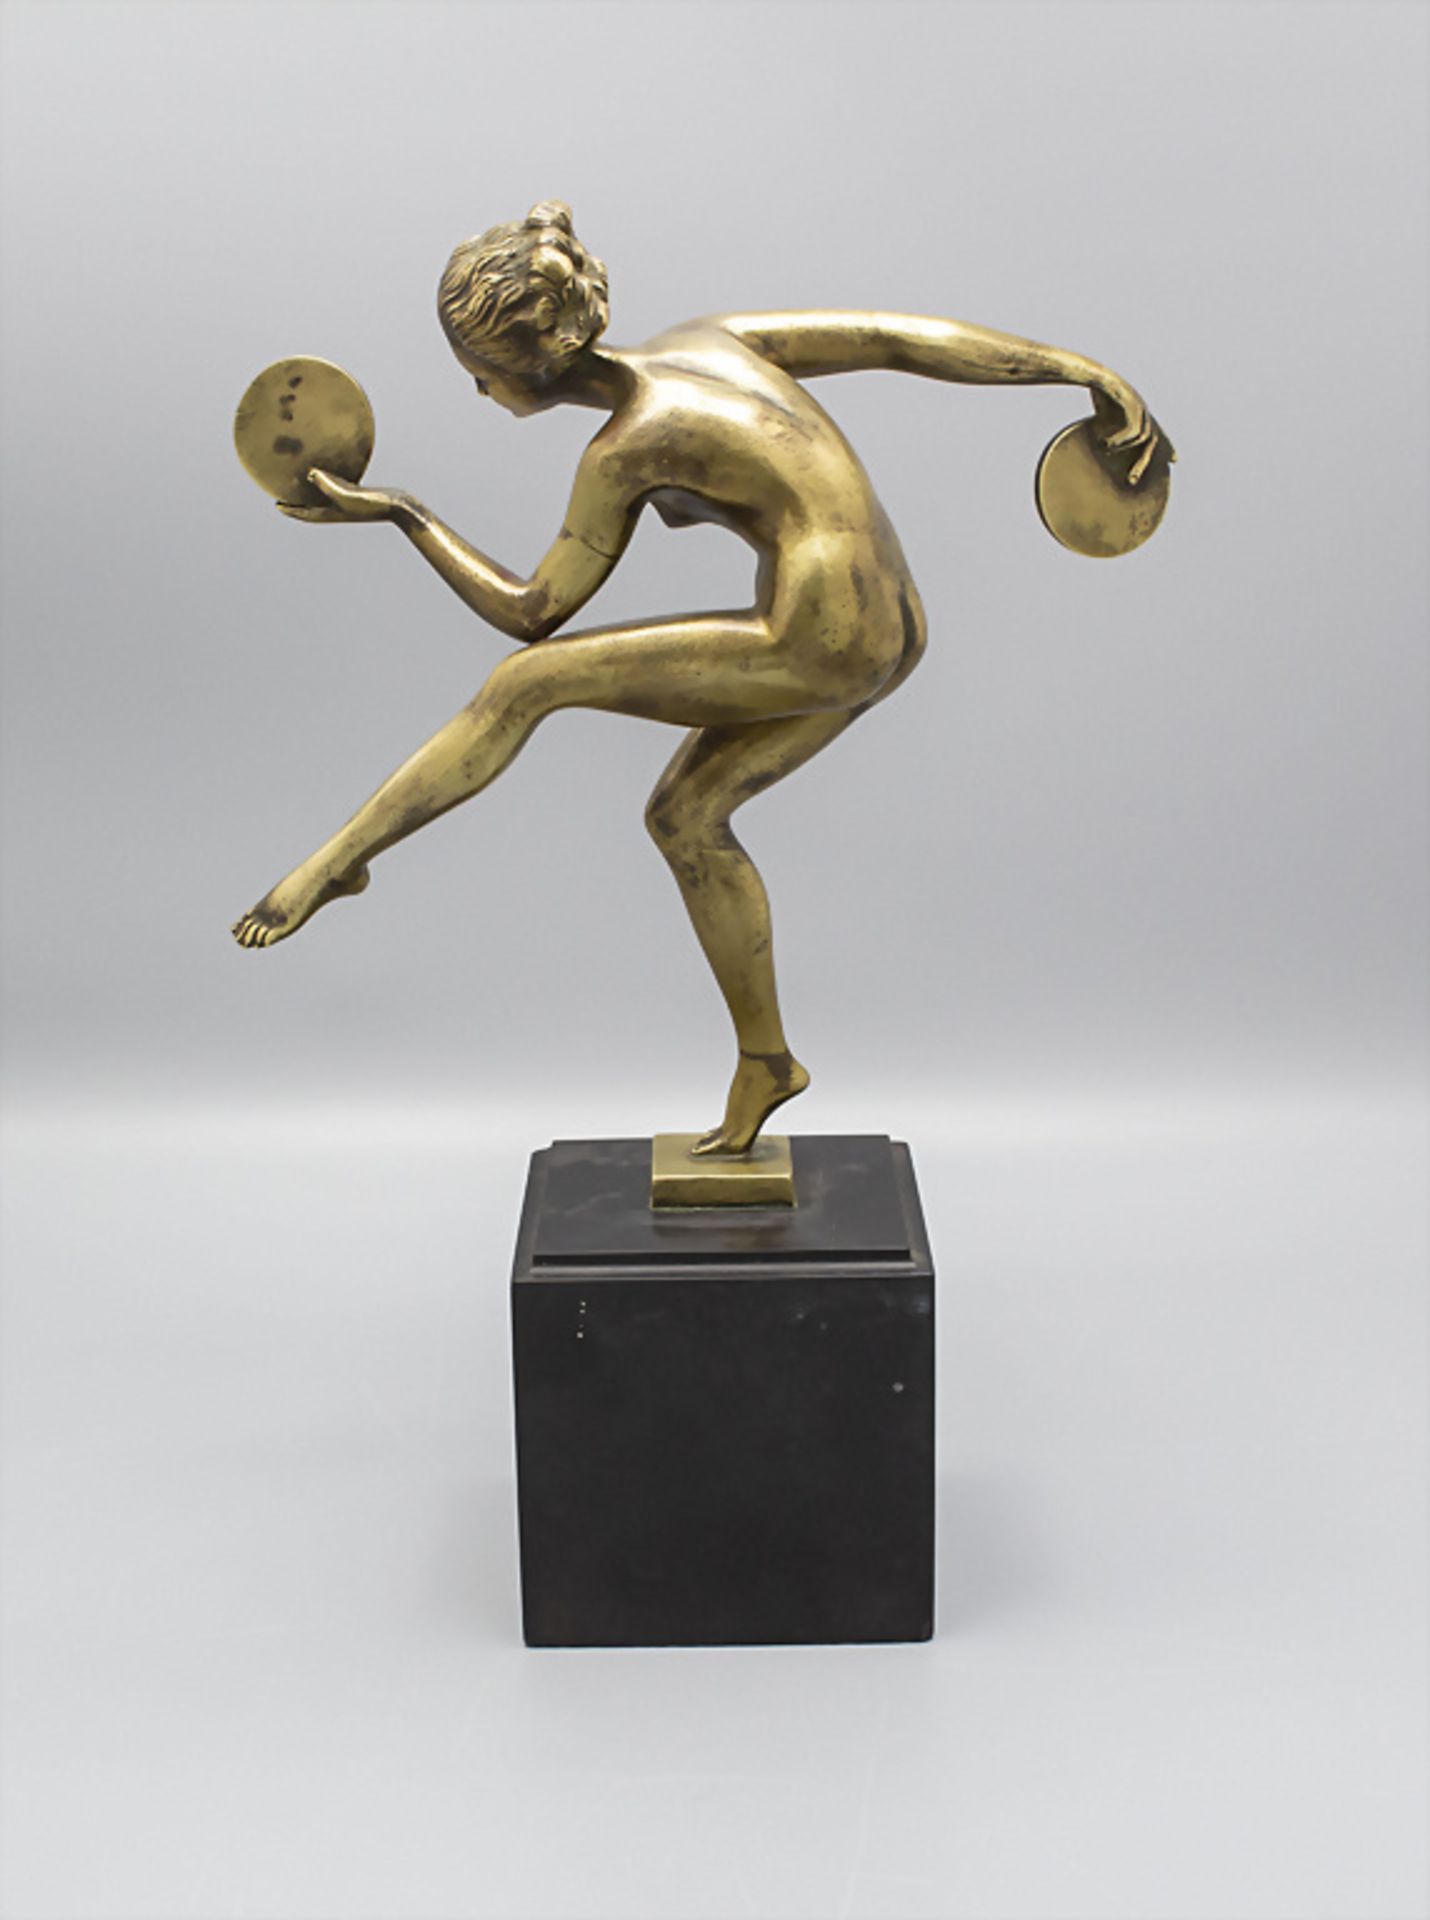 Art Déco Bronze 'Scheibentänzerin' / An Art Deco bronze 'Disc dancer', nach 1925 - Image 4 of 7